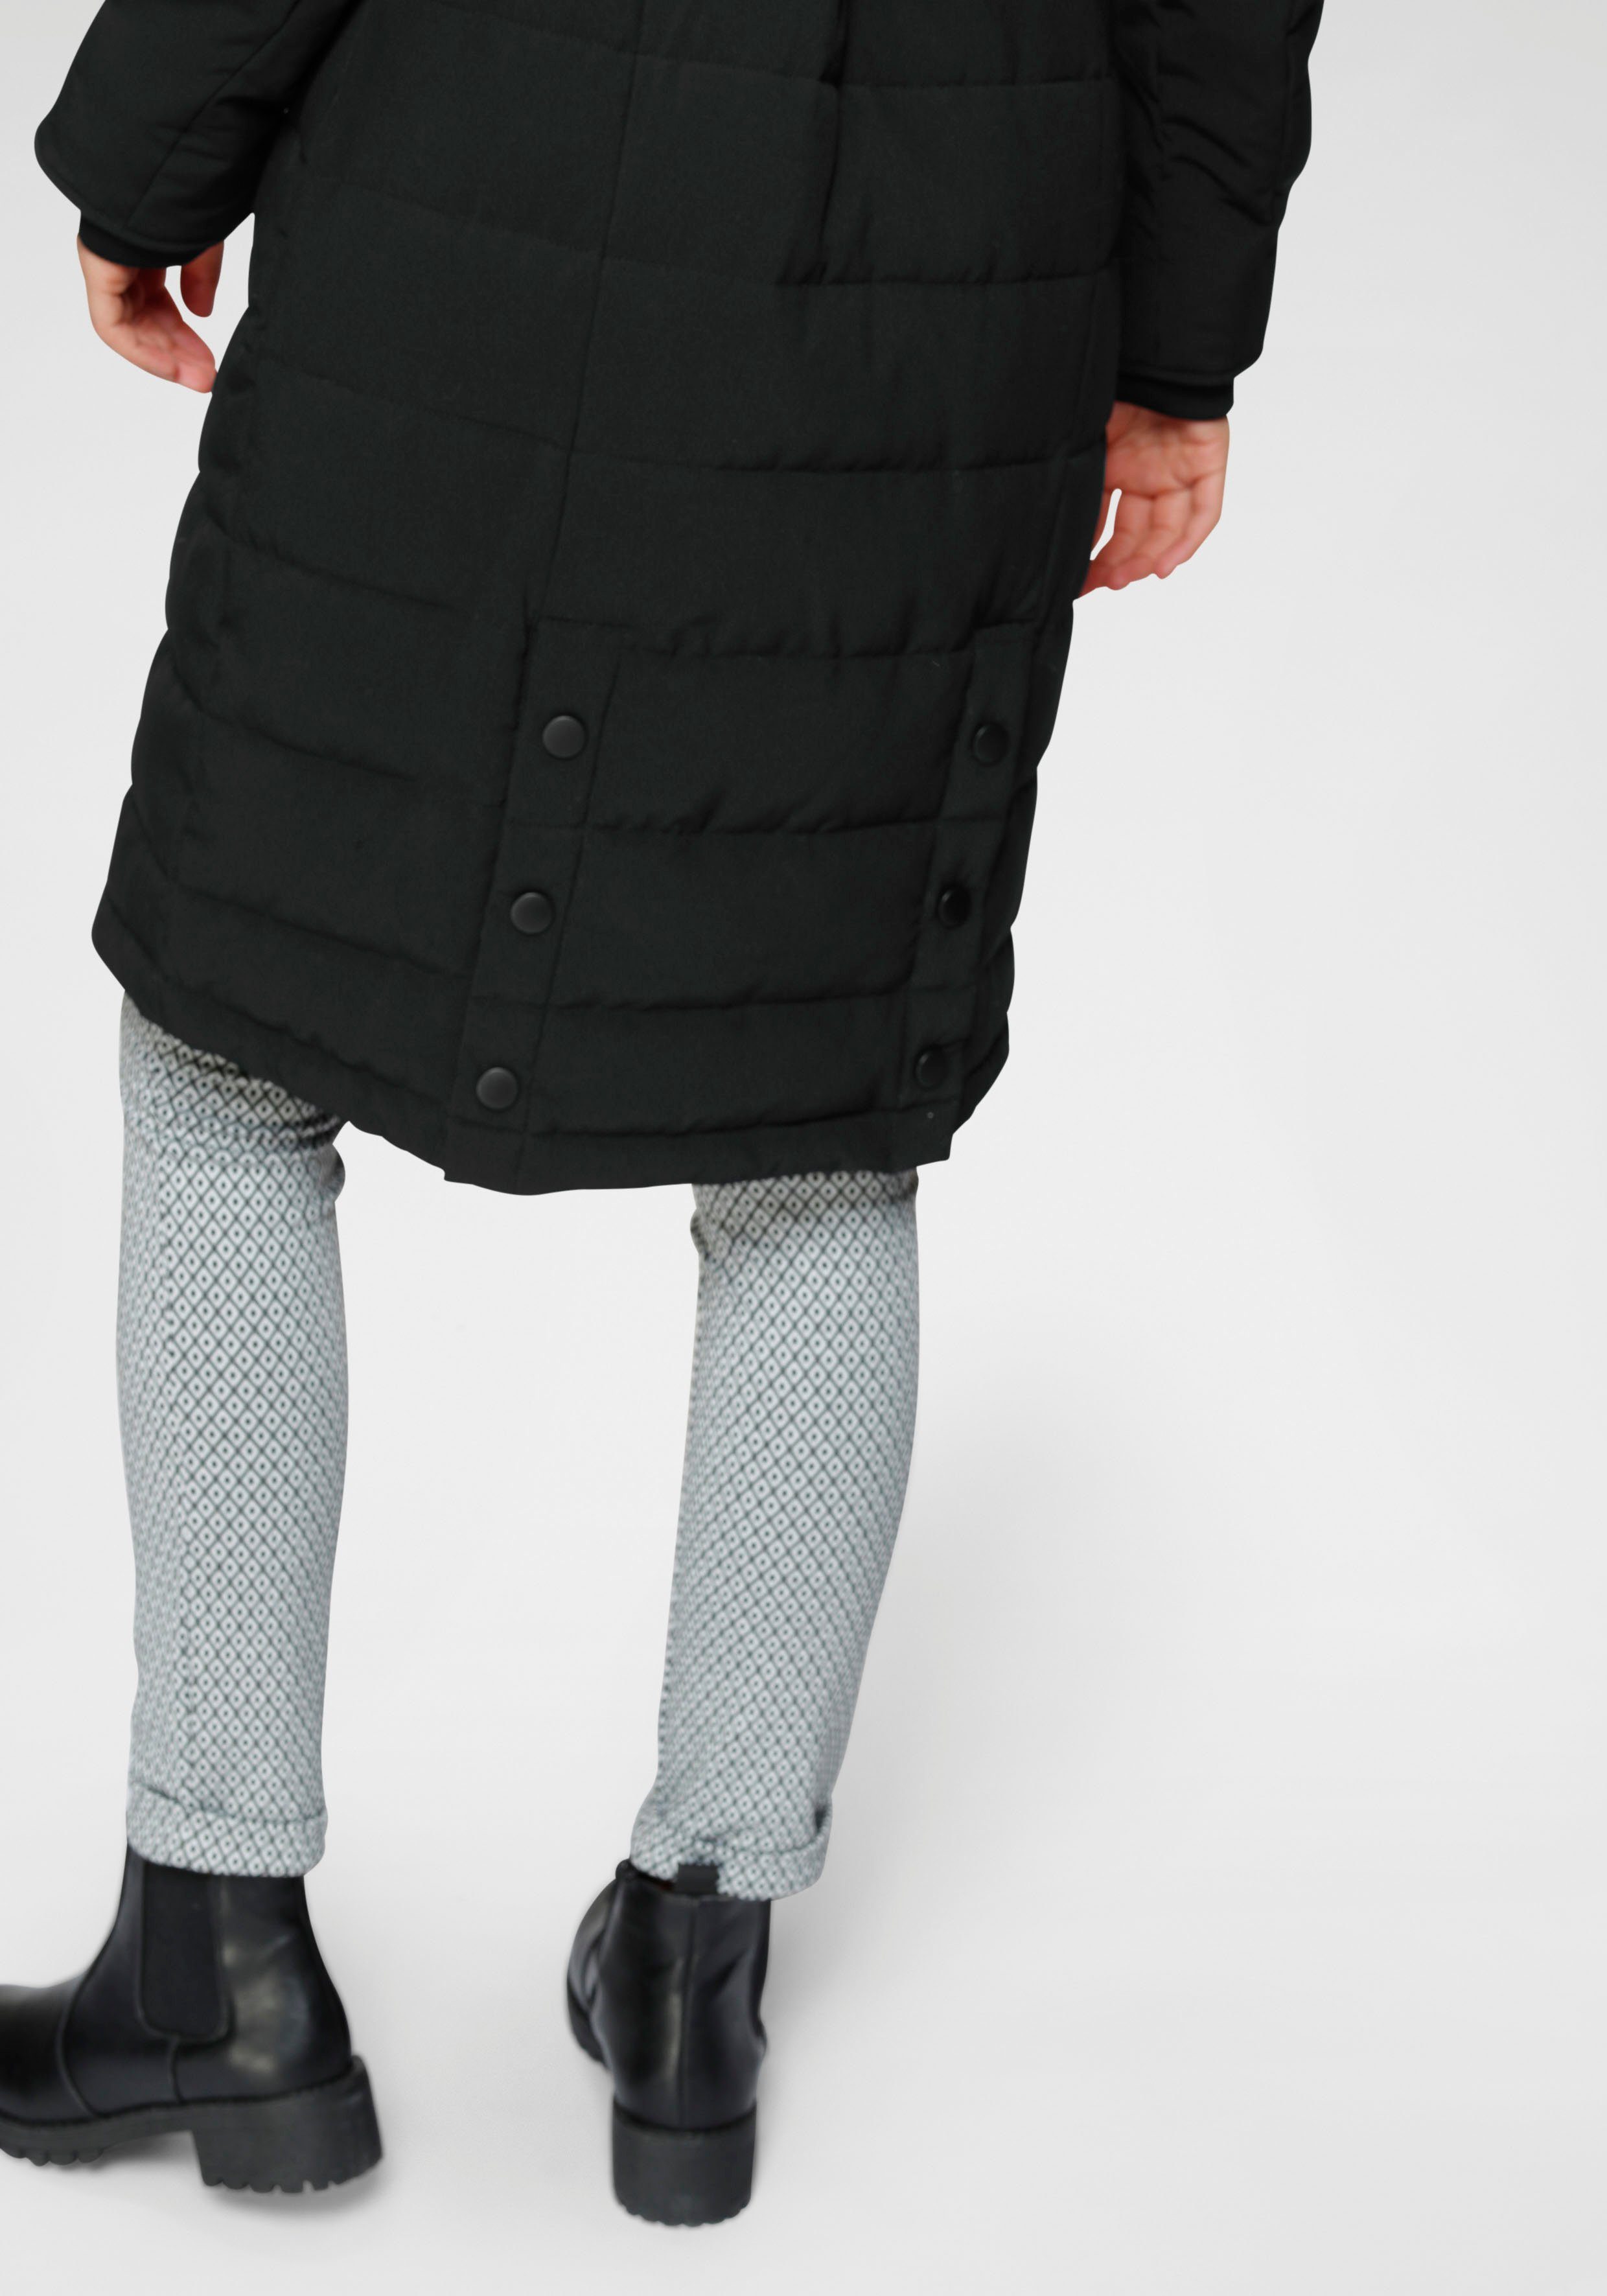 ALPENBLITZ auf long Markenprägung Kuschel-Kapuze Steppmantel aus black nachhaltigem Mantel mit Gürtel & abnehmbarer Material) (Jacke dem Oslo